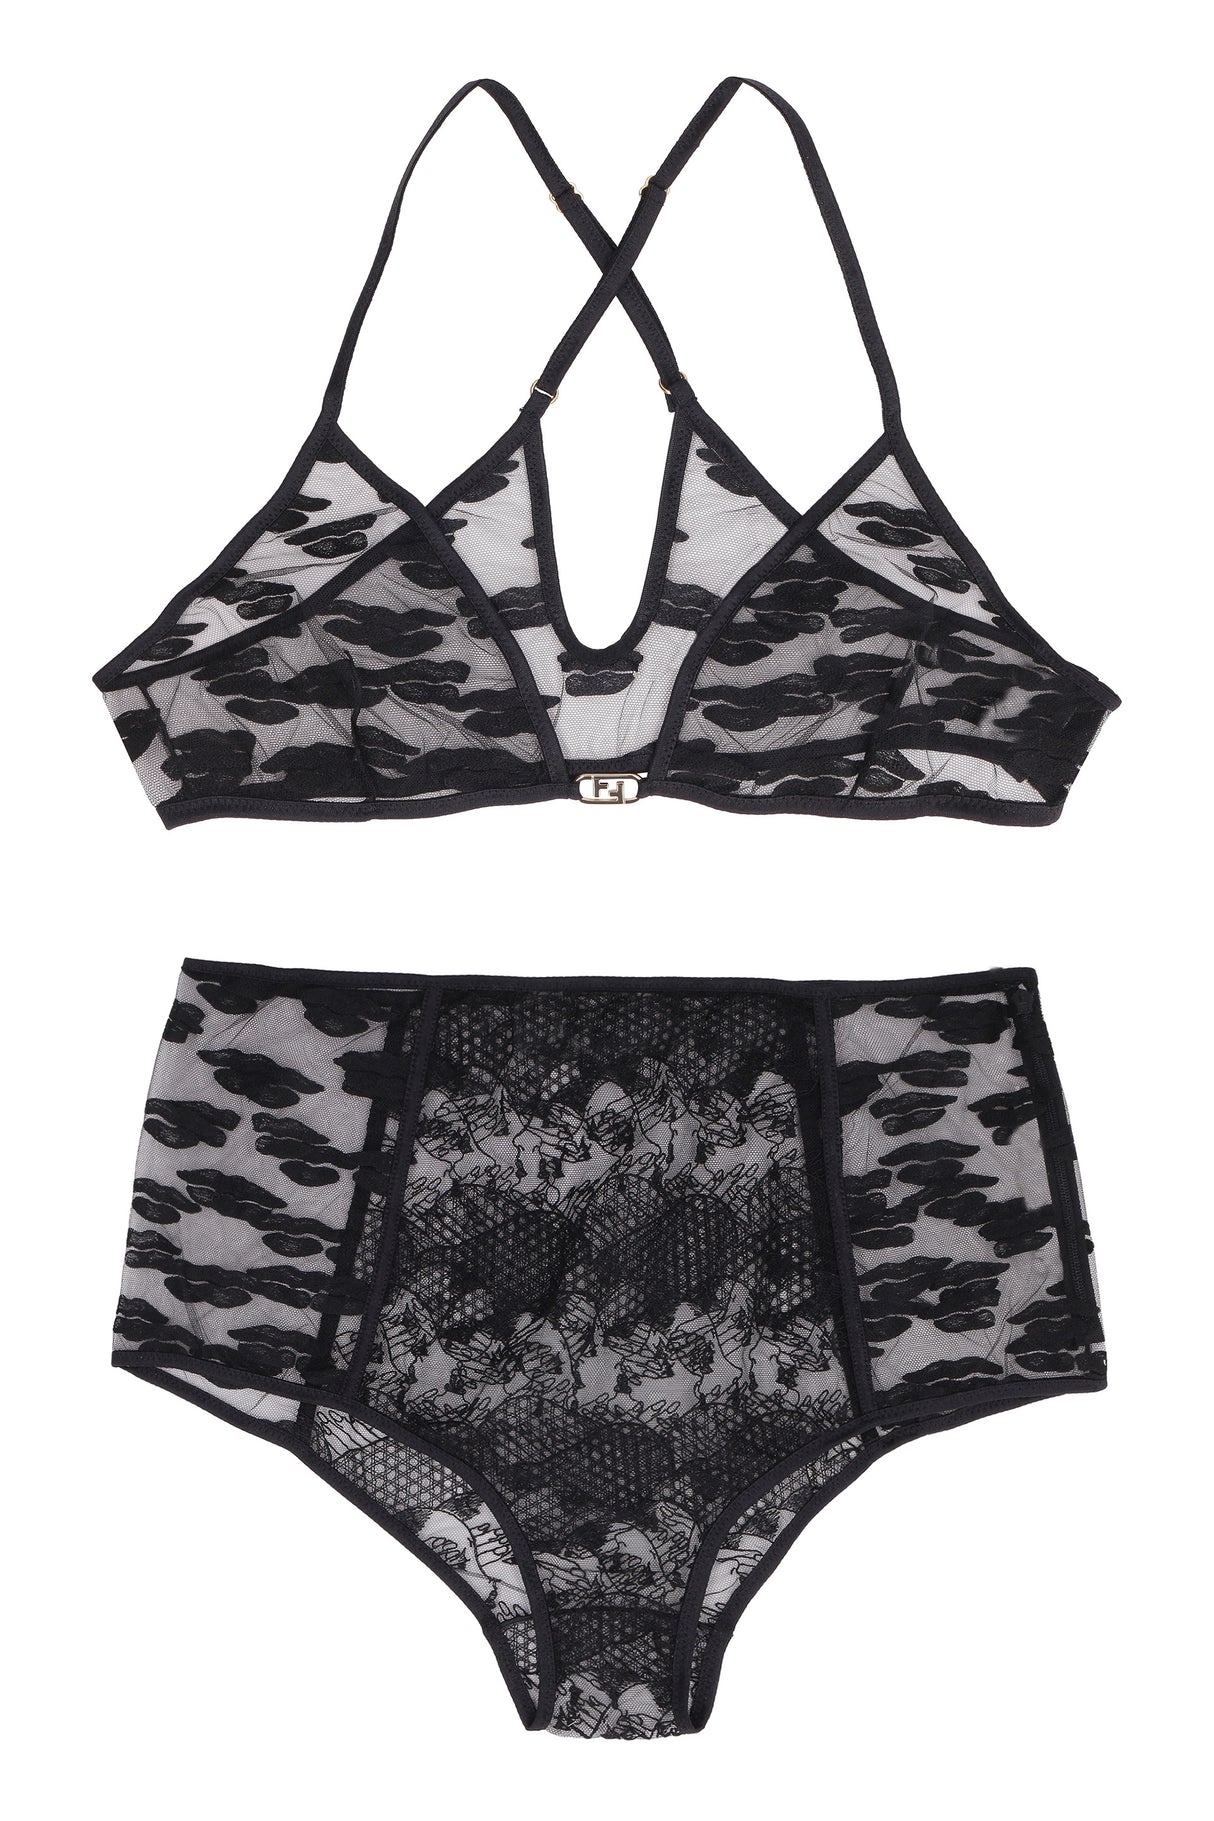 FENDI Feminine Black Lace Lingerie Set for Women - SS22 Collection